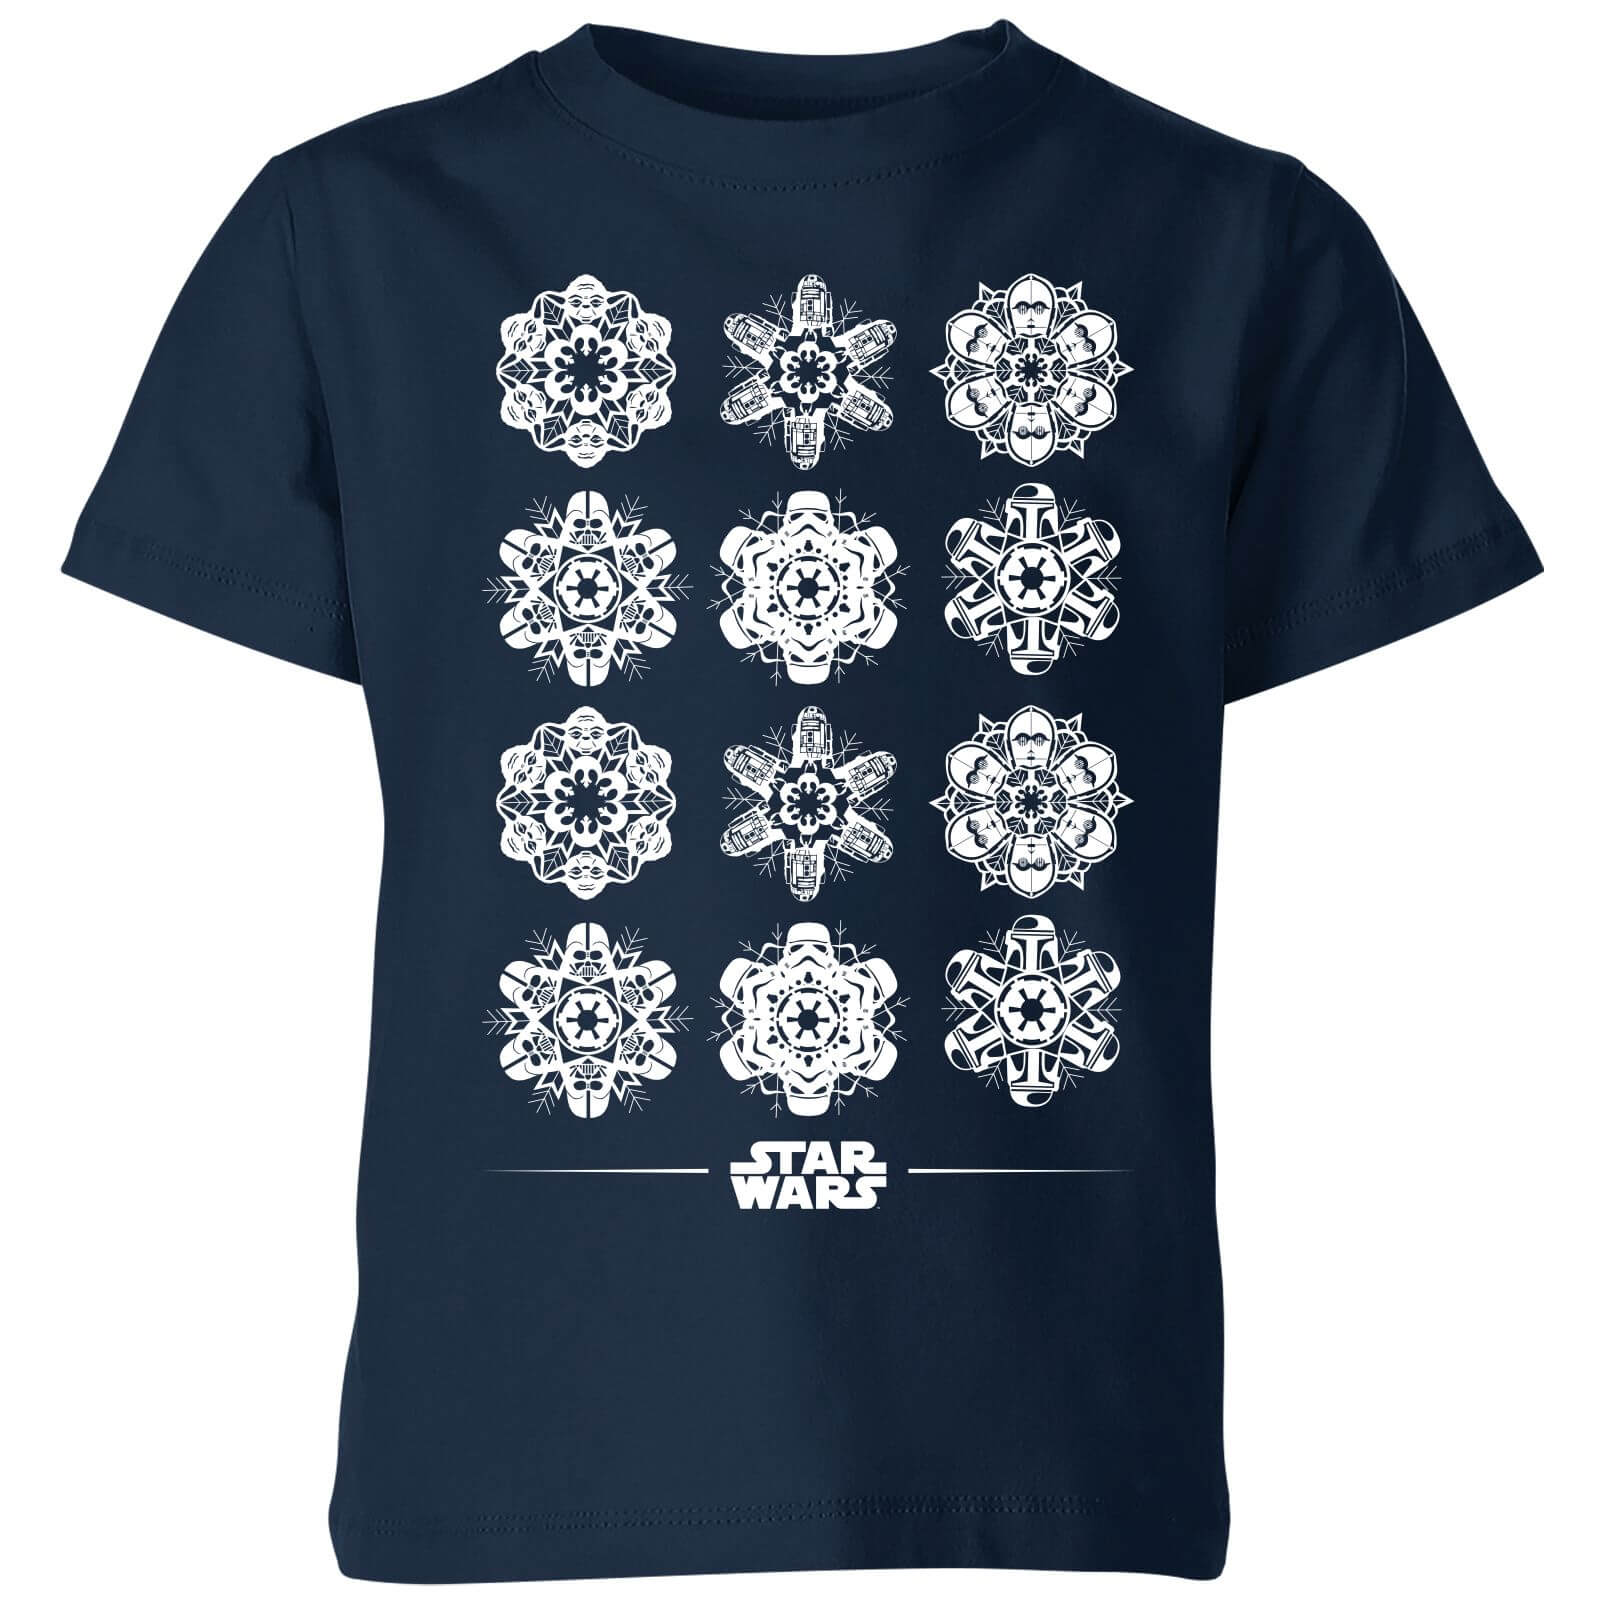 Star Wars Snowflake Kids Christmas T-Shirt - Navy - 11-12 Years